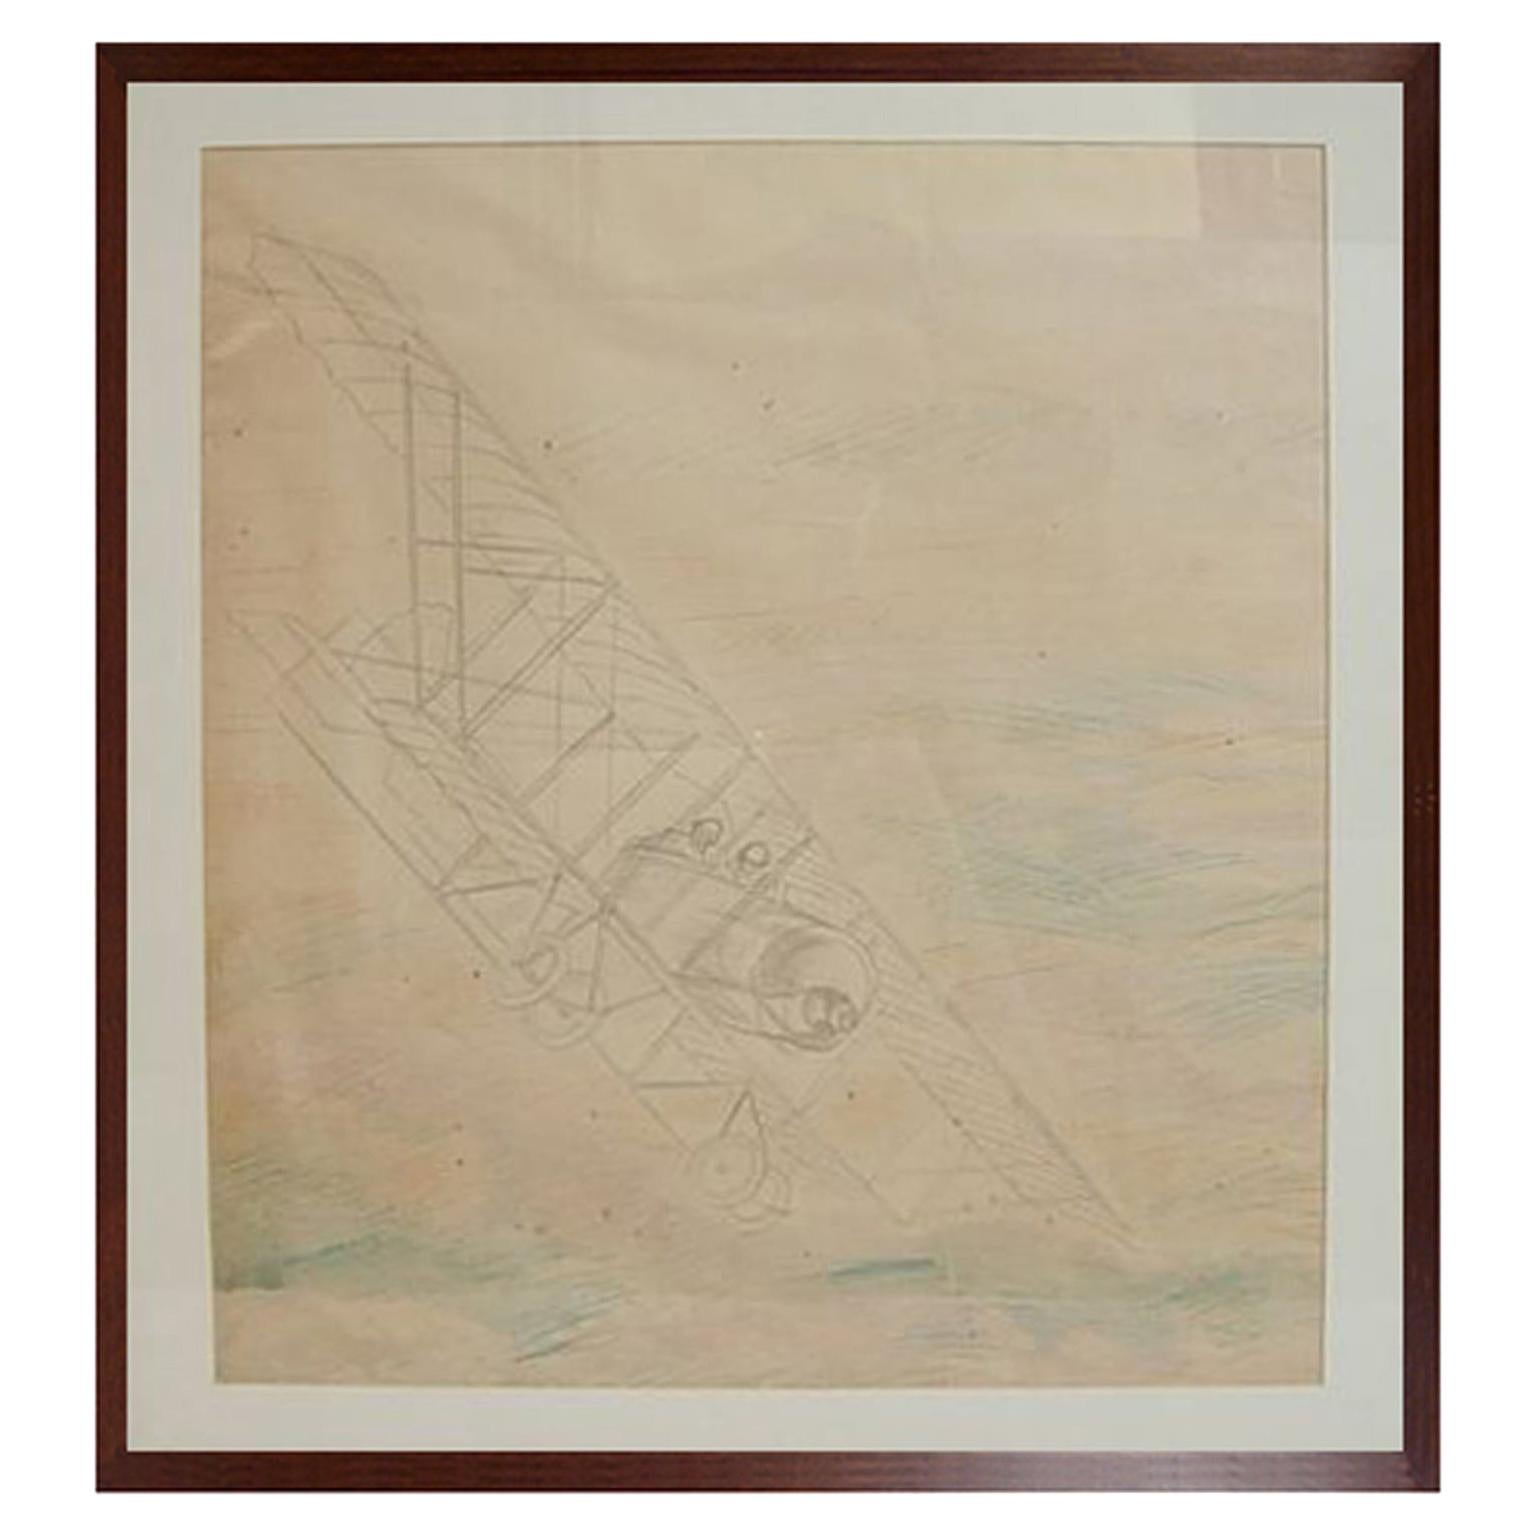 Pencil Aviation Drawing Depicting a Caudron G Wwi Aircraft by Riccardo Cavigioli